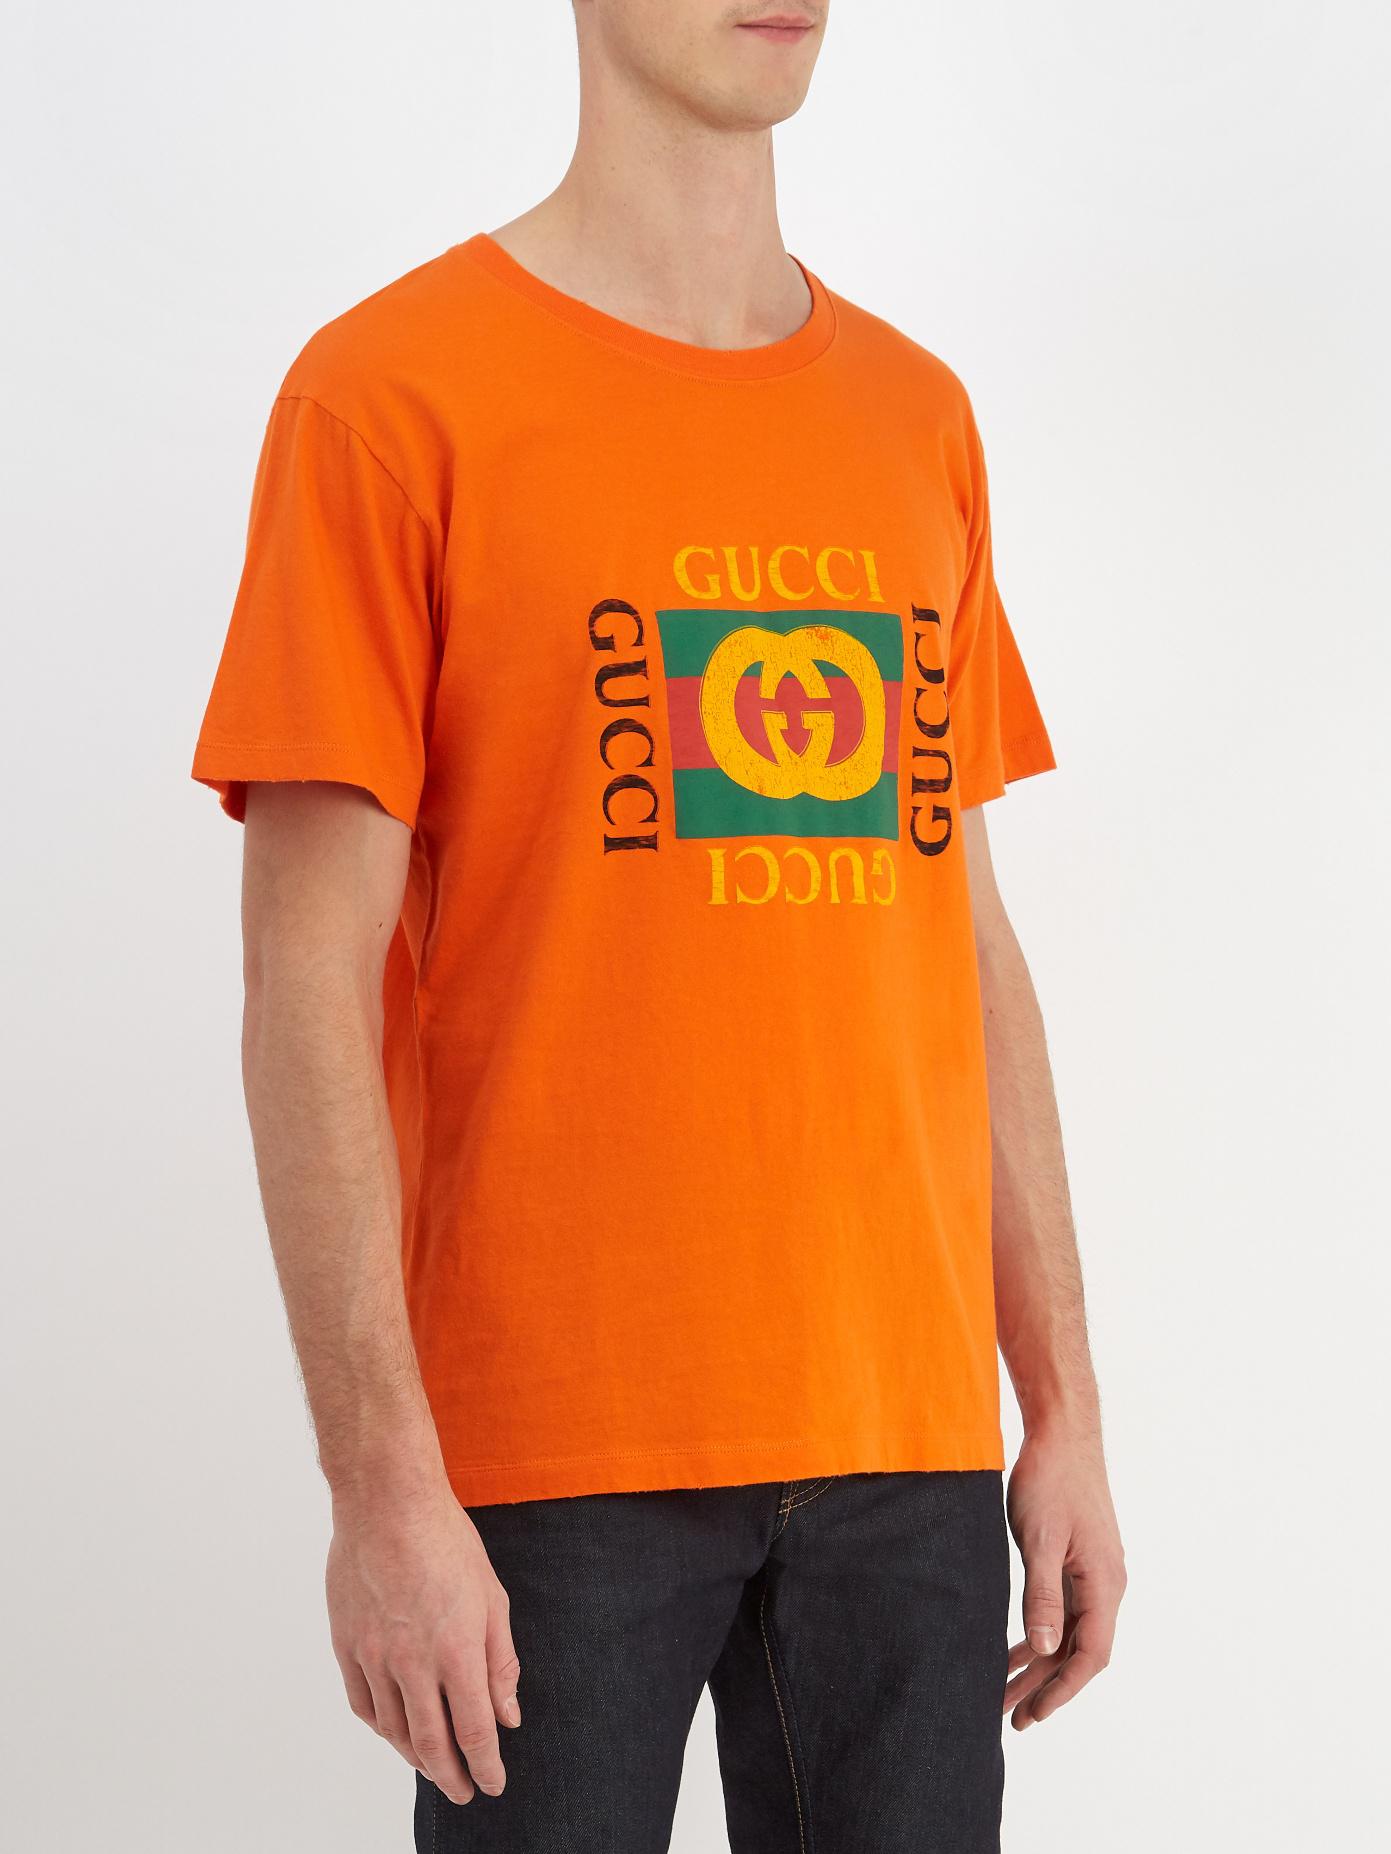 Gucci Logo Cotton T-shirt in Orange for Men - Lyst